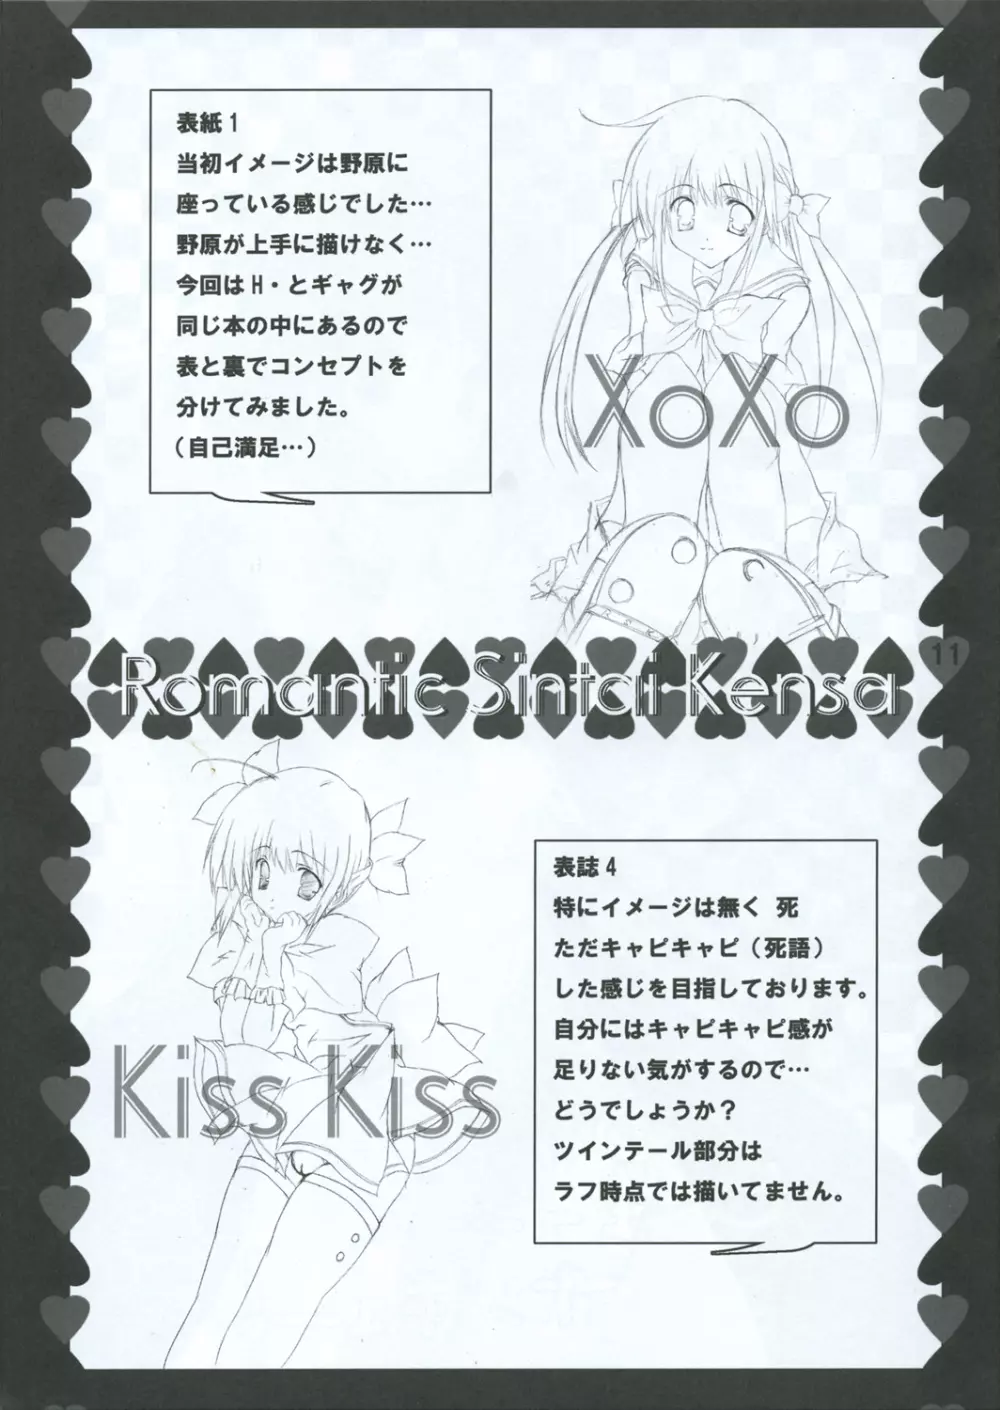 XoXo/kiss kiss 11ページ